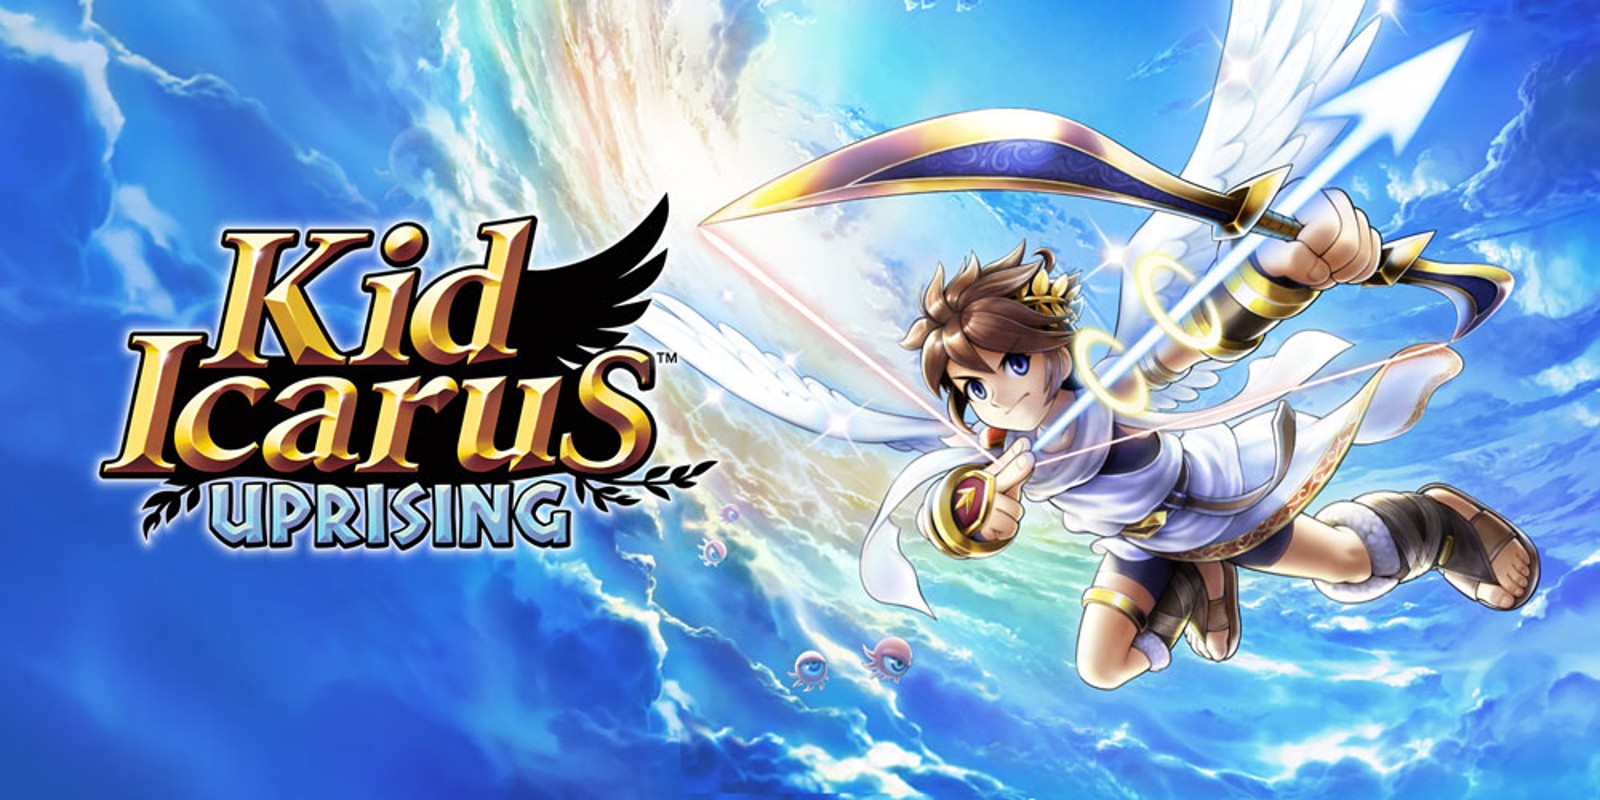 Kid Icarus Uprising Logo